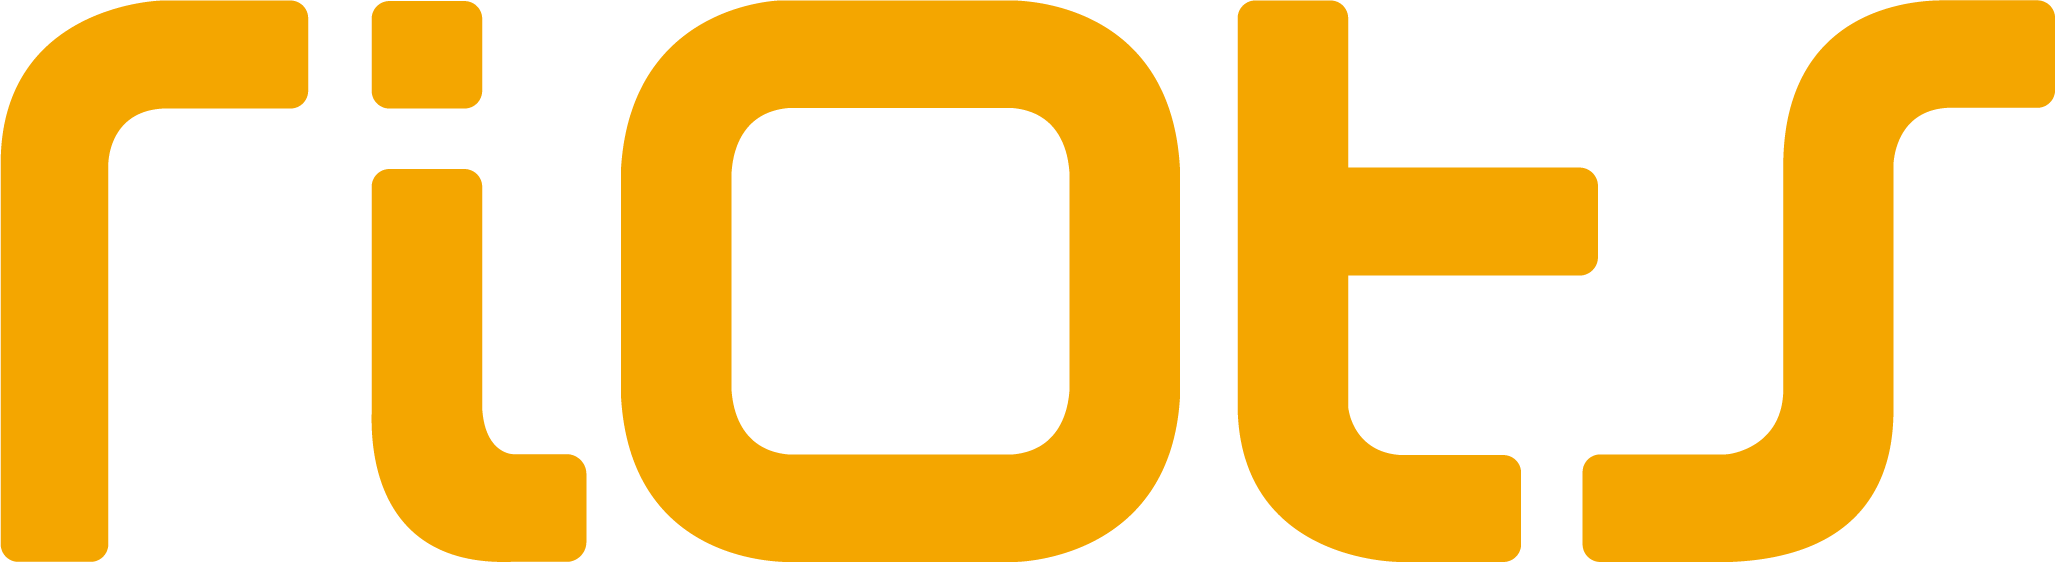 Riots logo